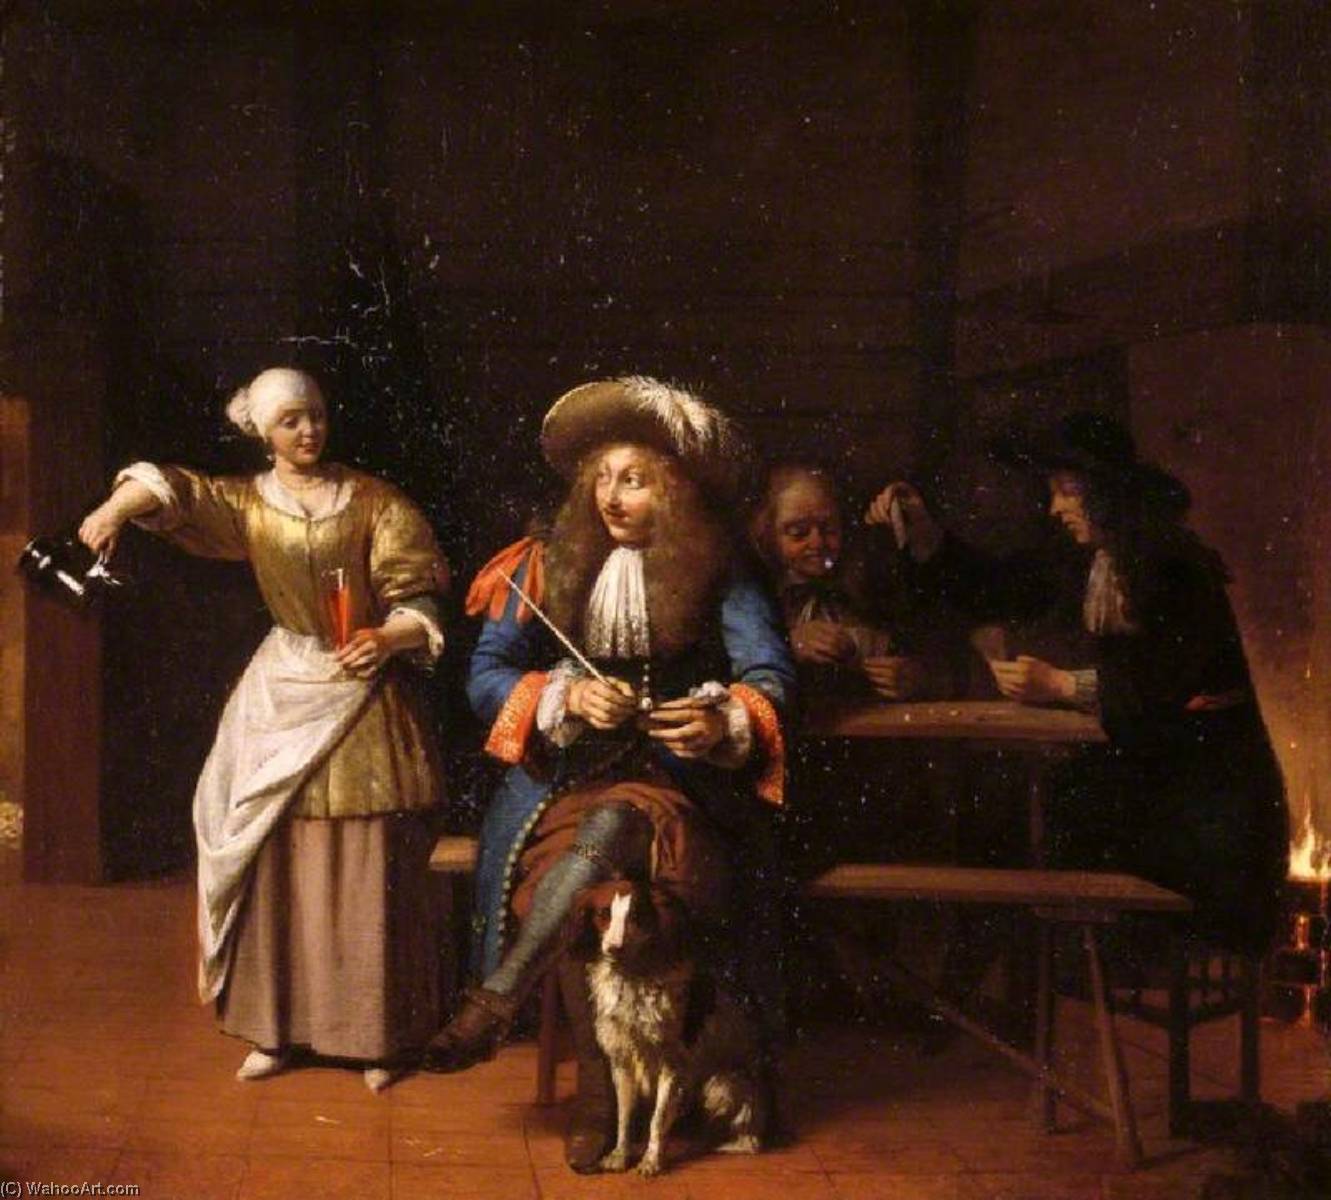 Wikioo.org - Bách khoa toàn thư về mỹ thuật - Vẽ tranh, Tác phẩm nghệ thuật Pieter De Hooch - The Empty Jug A Tavern Scene with a Serving Wench, a Gentleman with a Pipe and a Dog, and Card Players